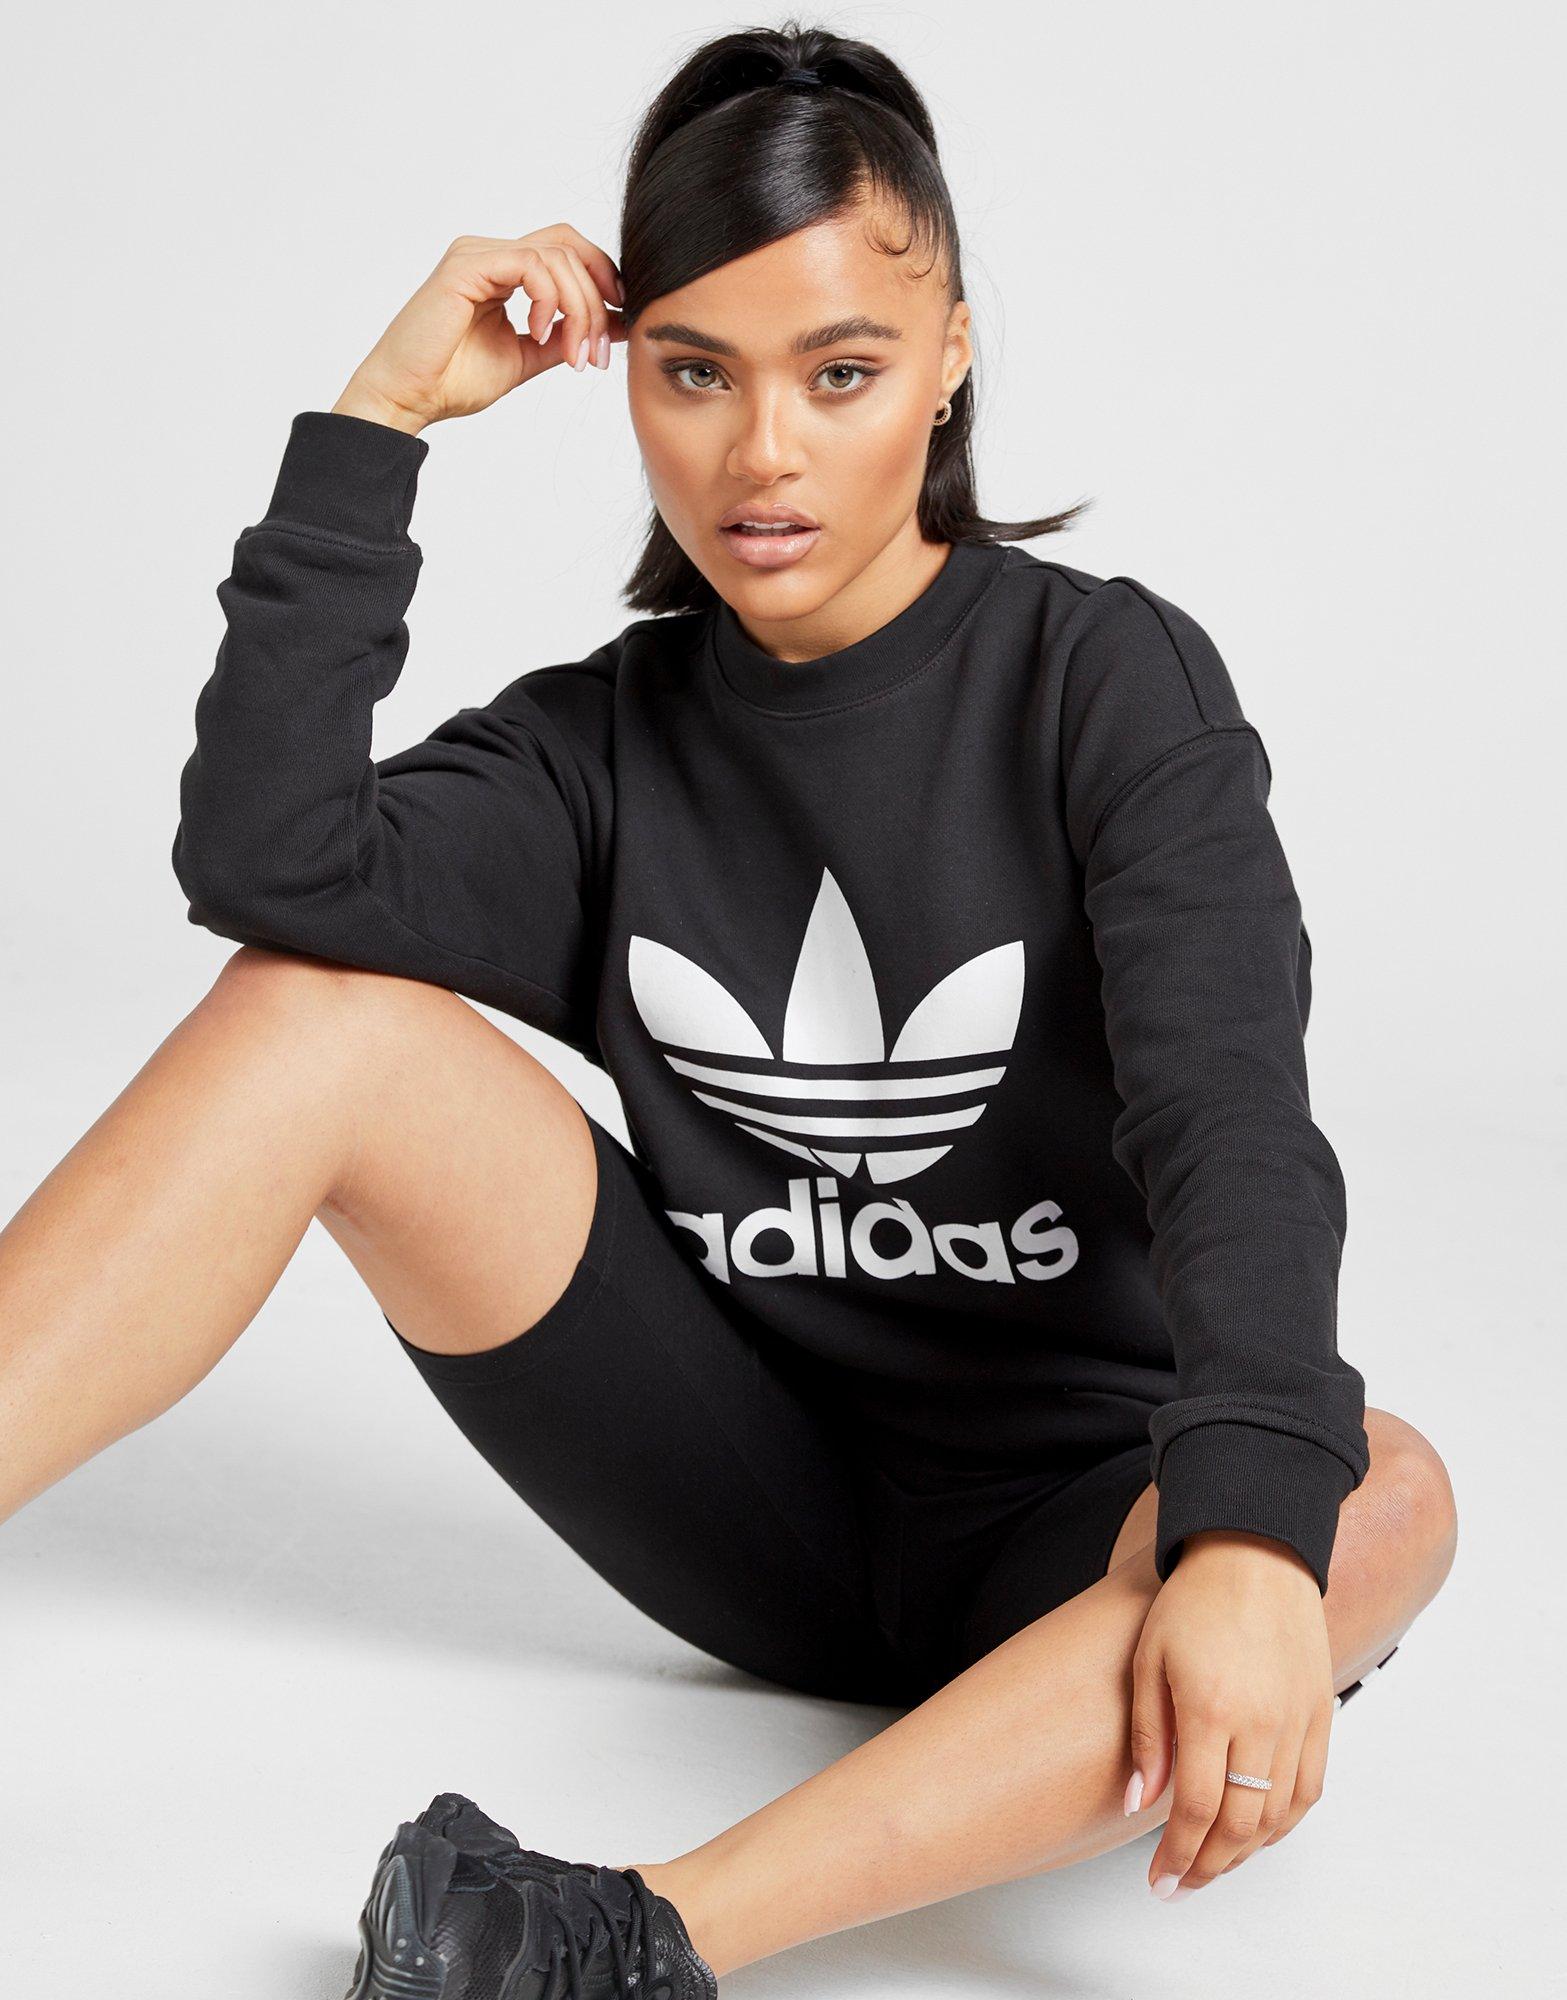 New adidas Originals Women’s Trefoil Crew Sweatshirt | eBay